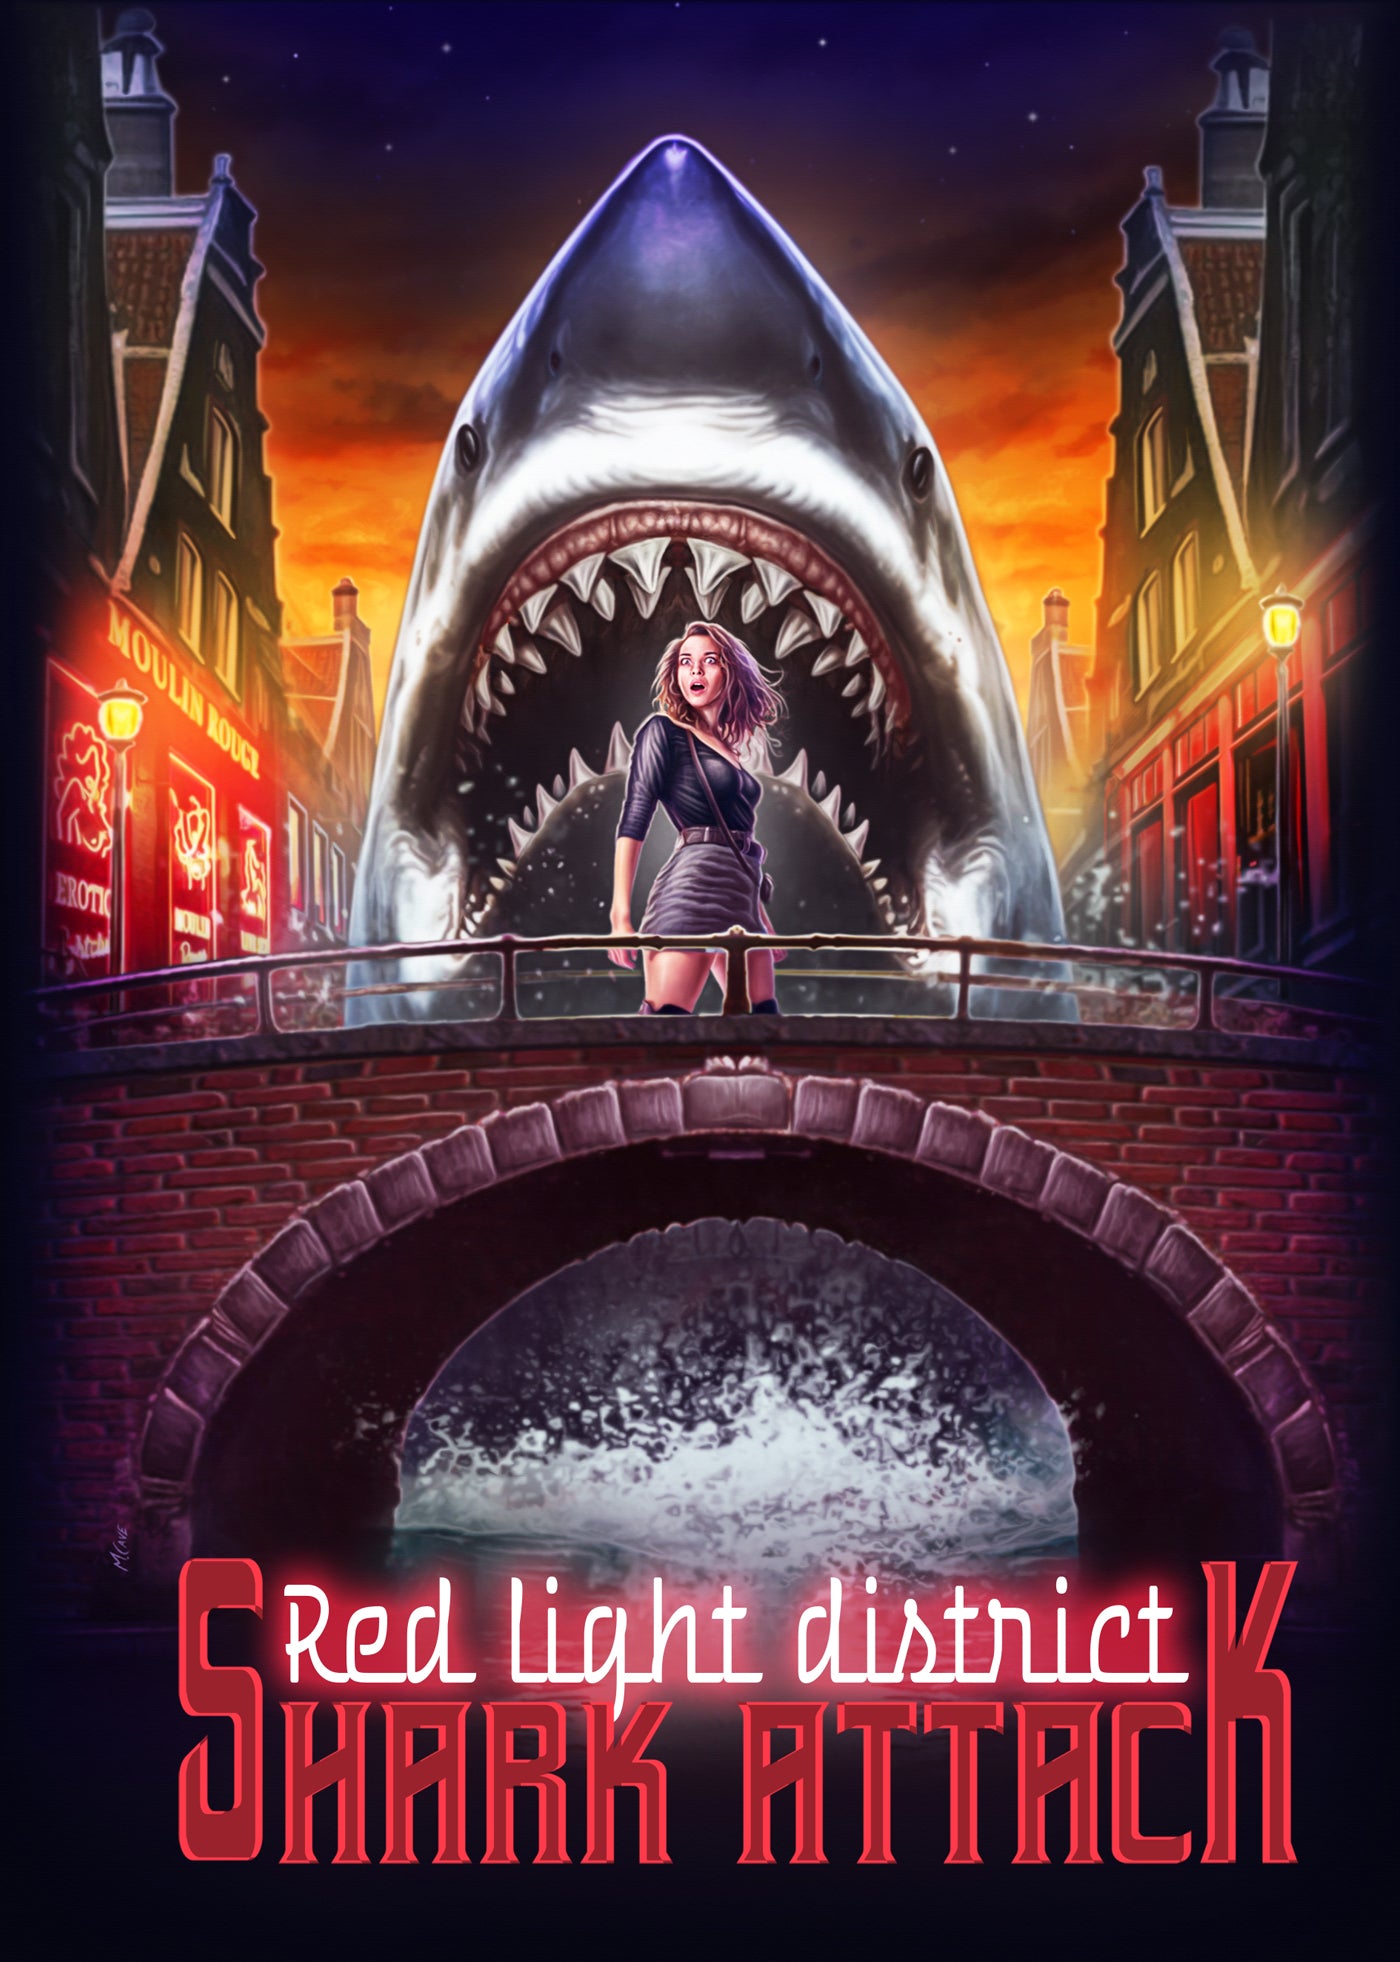 RED LIGHT DISTRICT SHARK ATTACK DVD